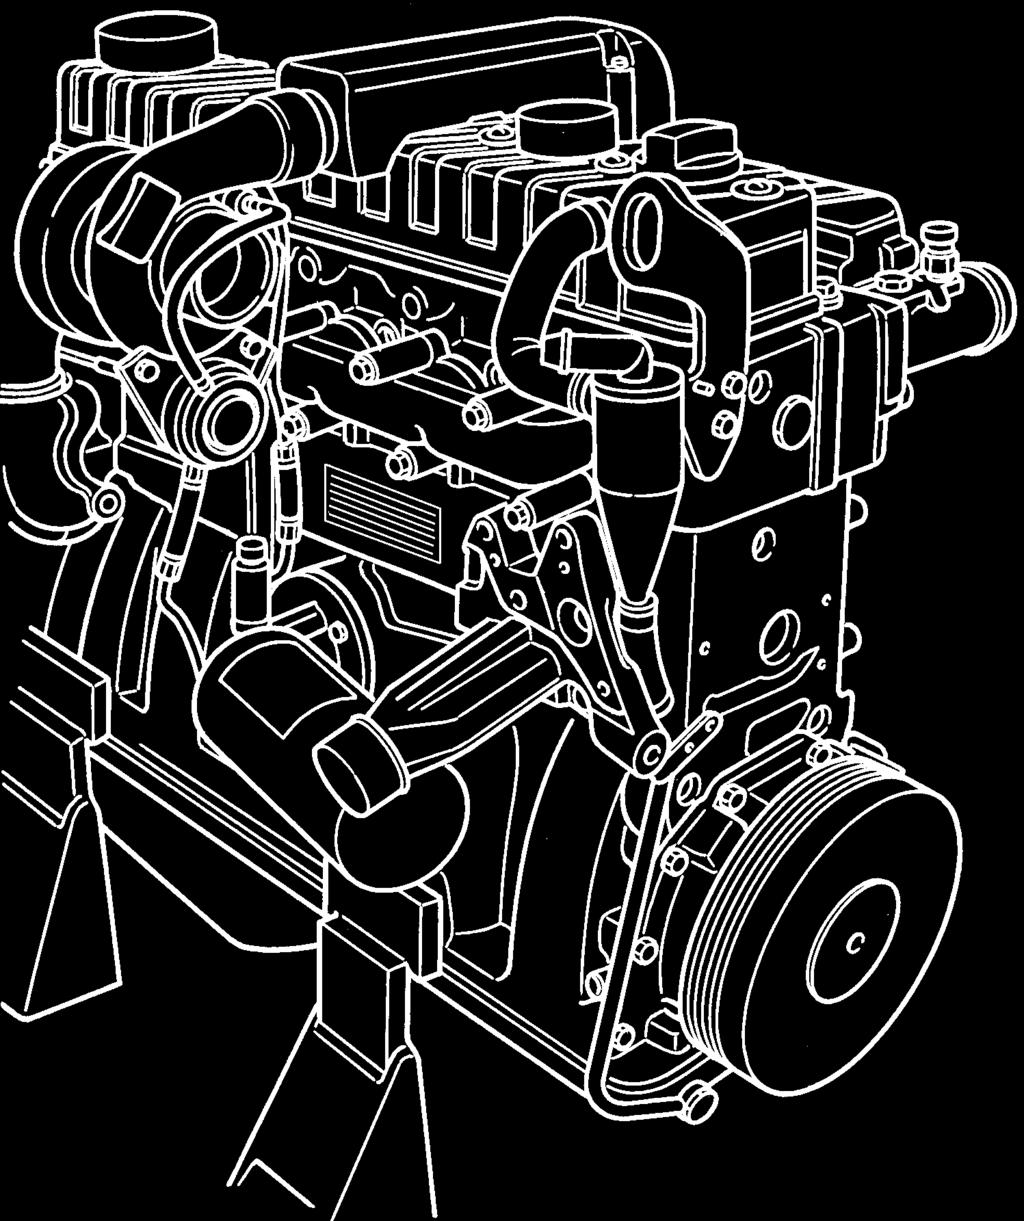 Número de série del motor Engine serial number 6.